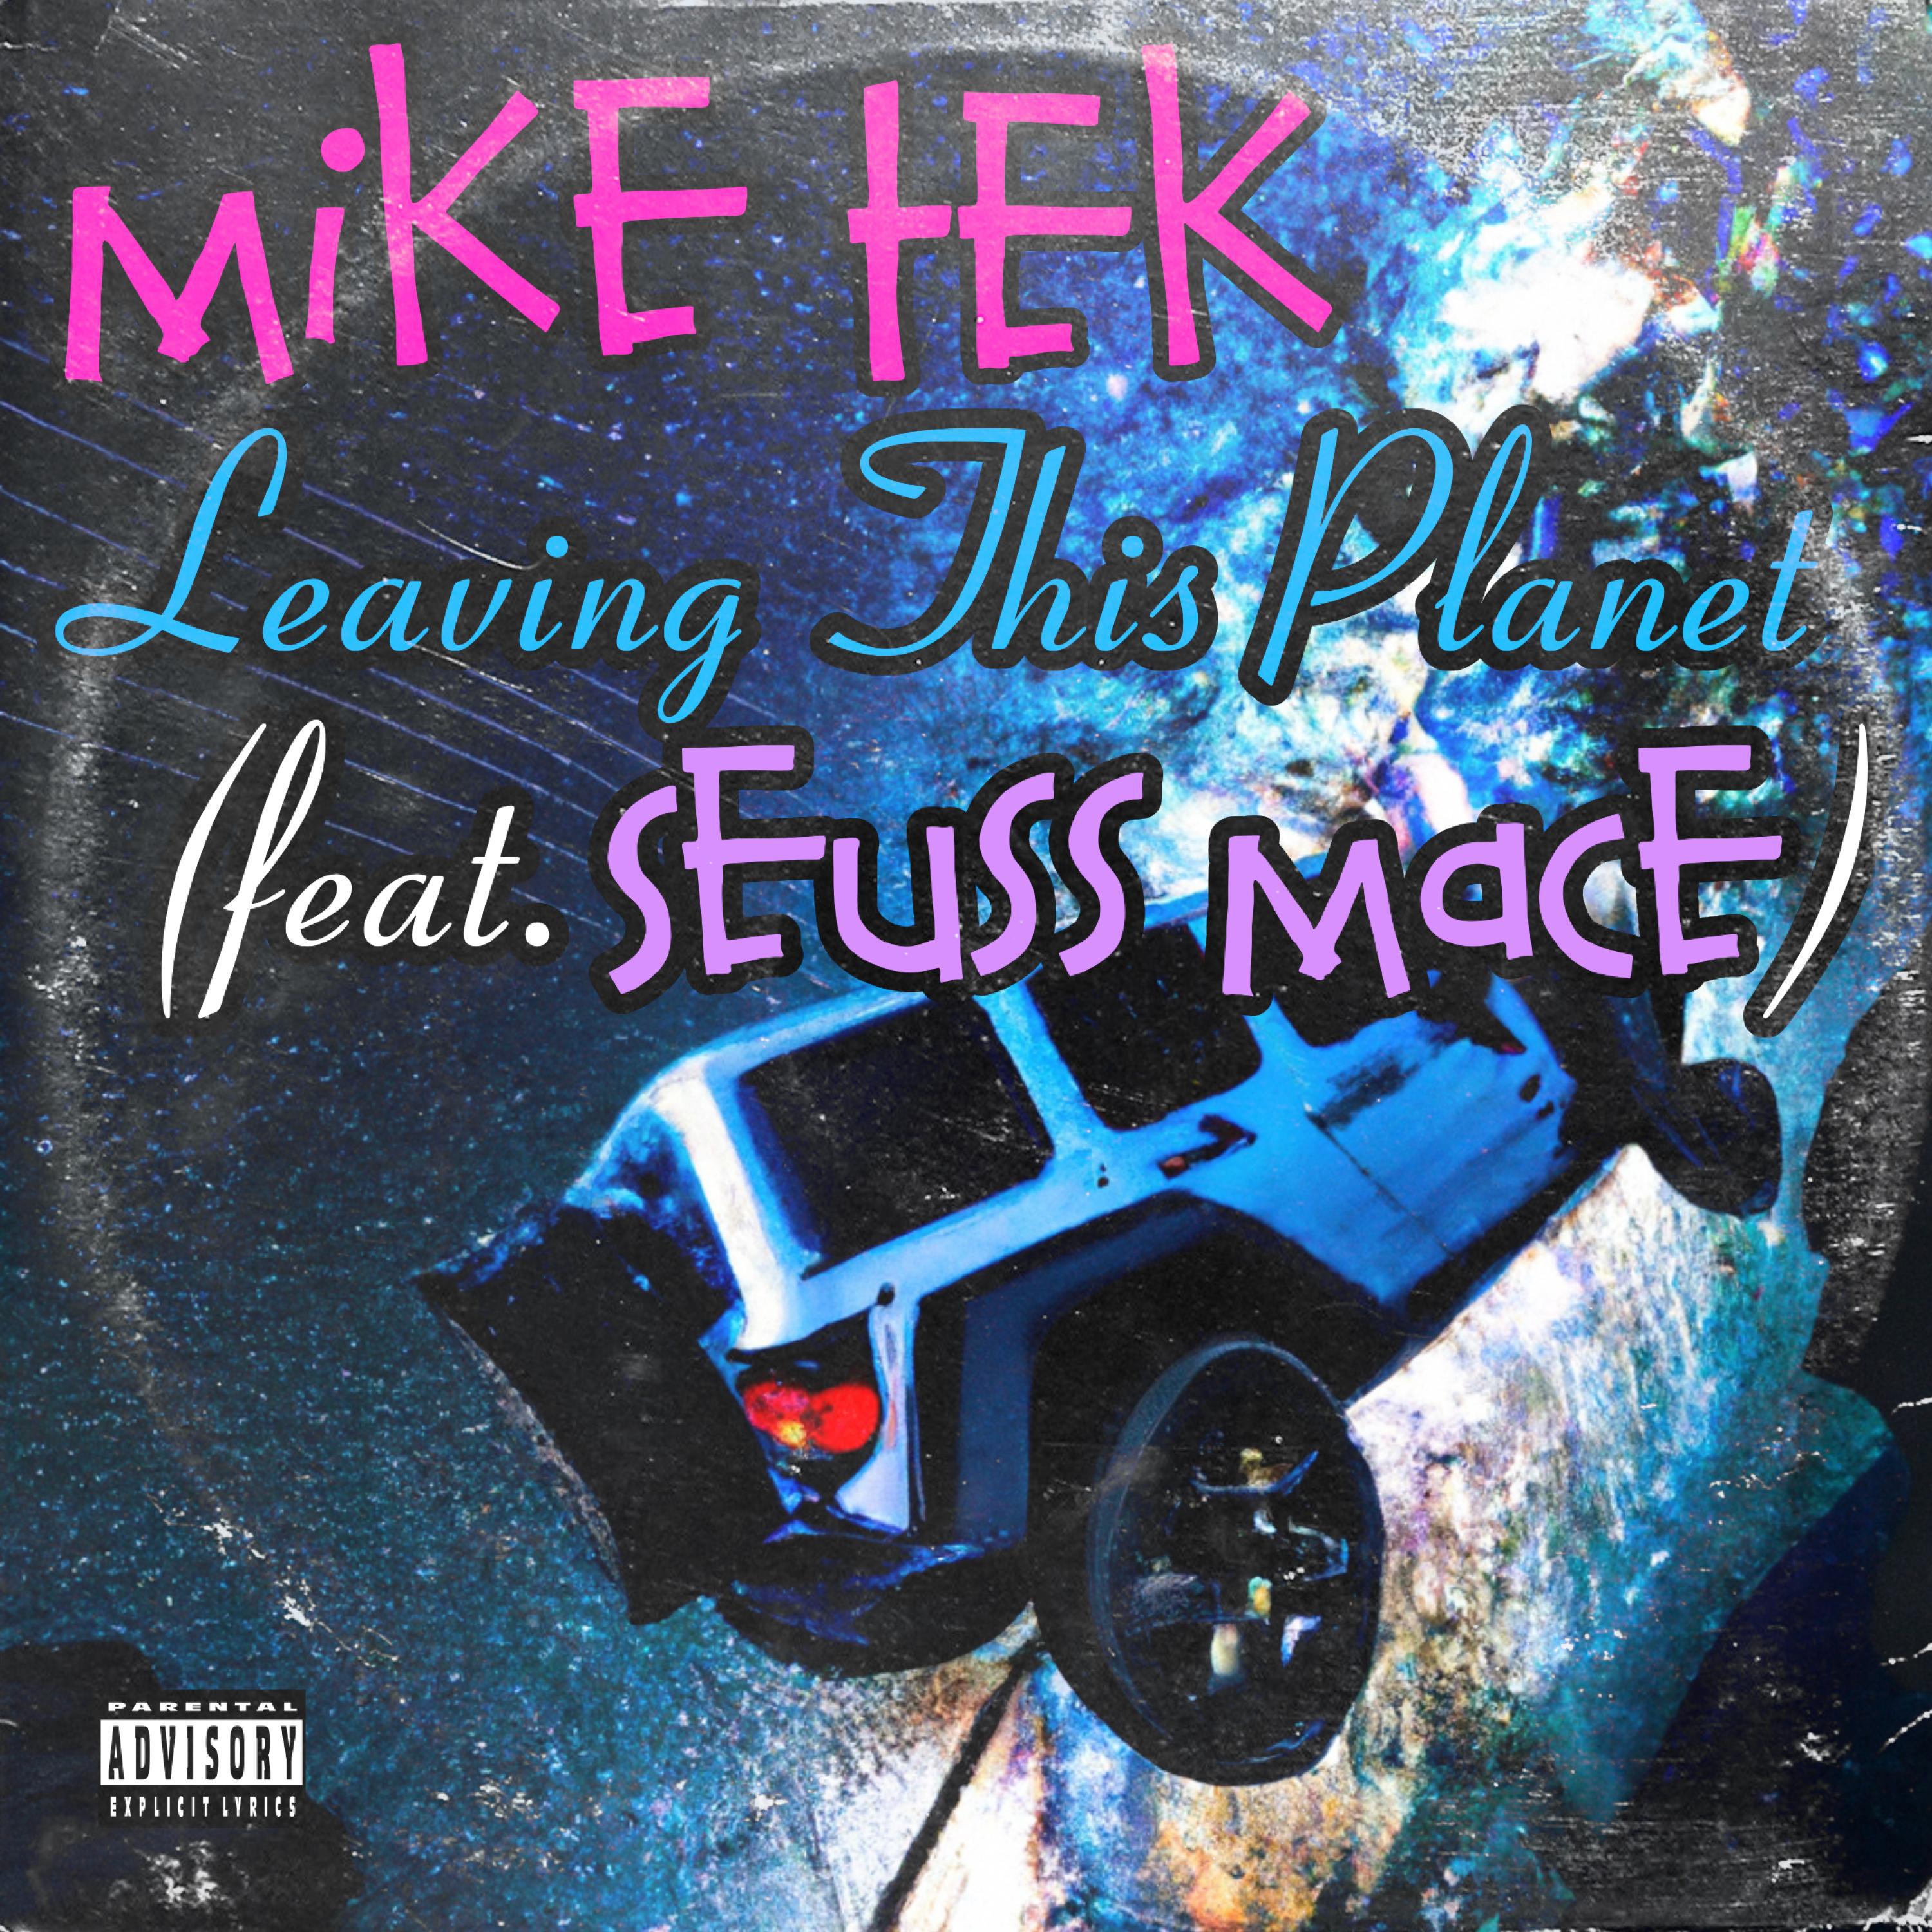 Mike Tek - Leaving This Planet (feat. Seuss Mace)